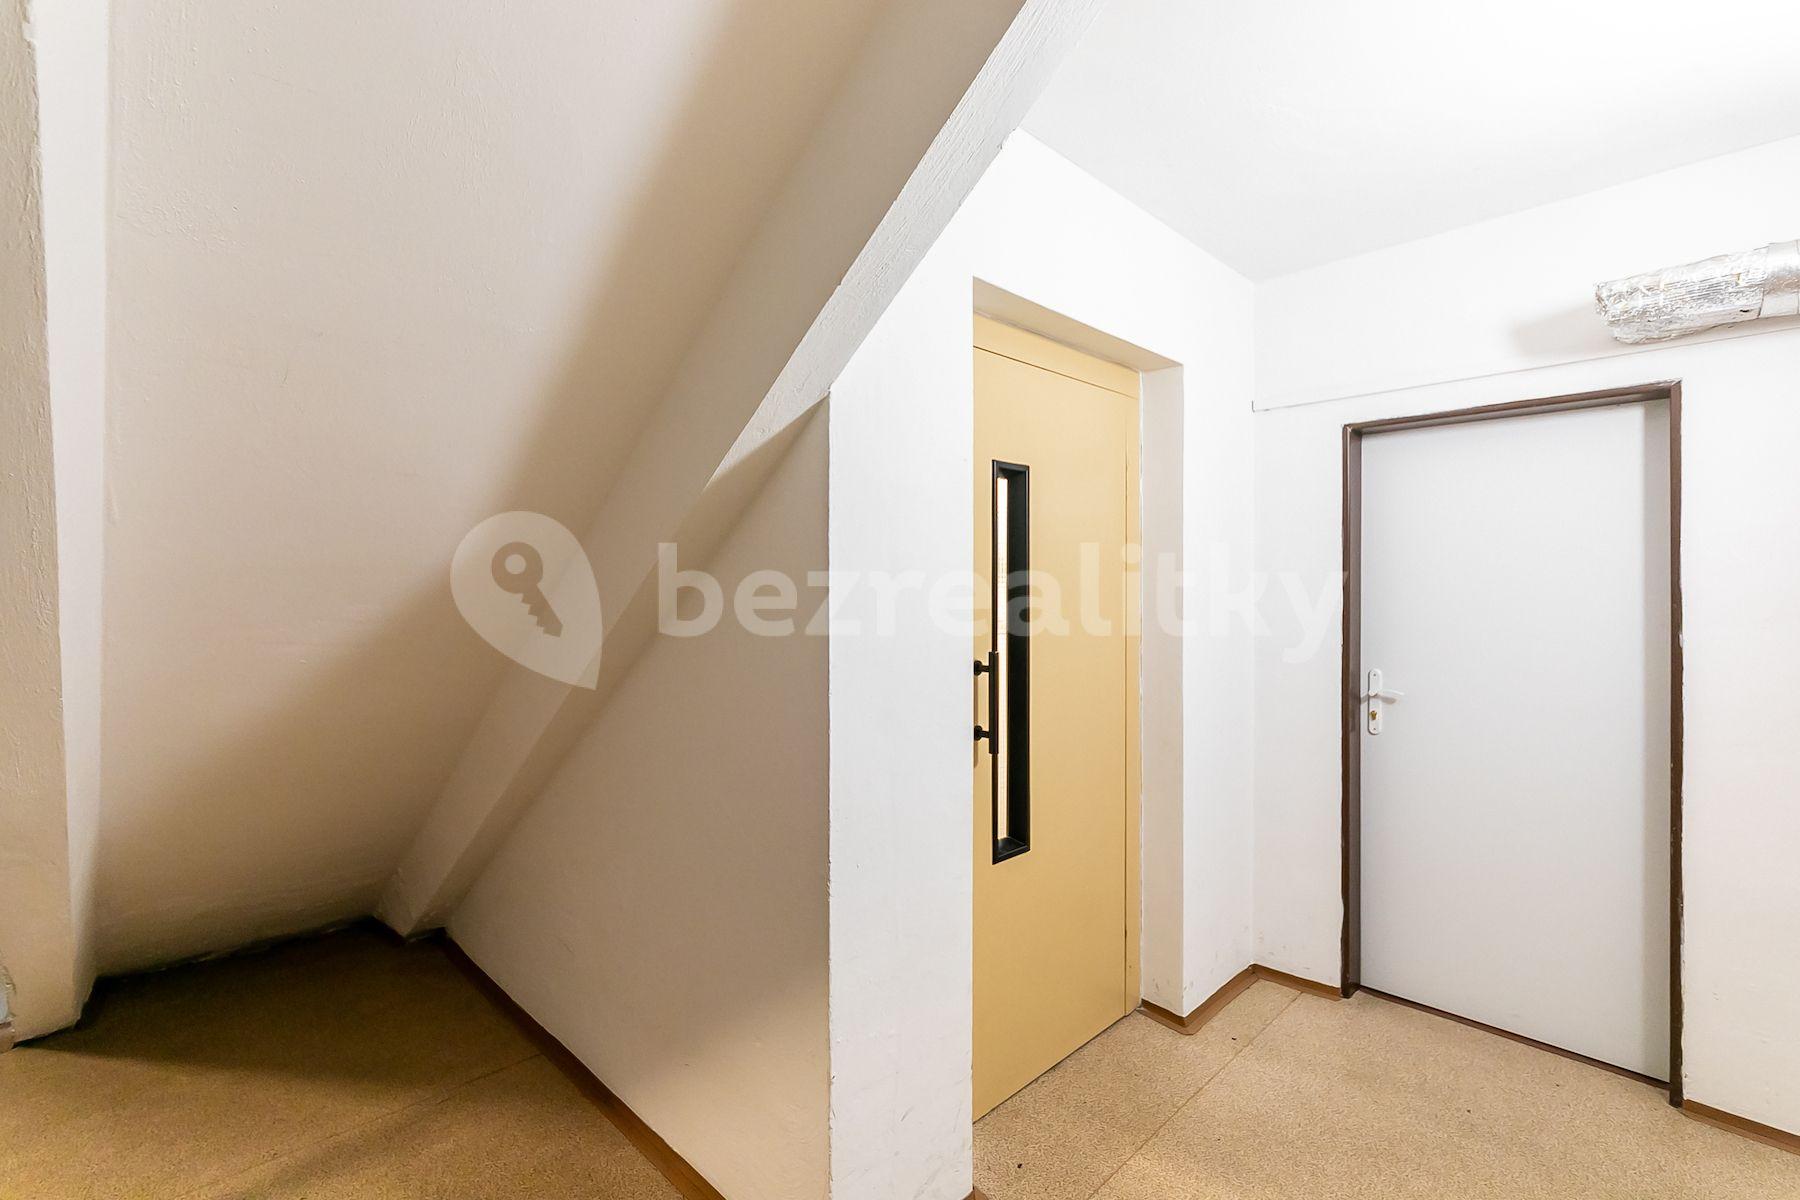 3 bedroom flat for sale, 85 m², Děčínská, Prague, Prague